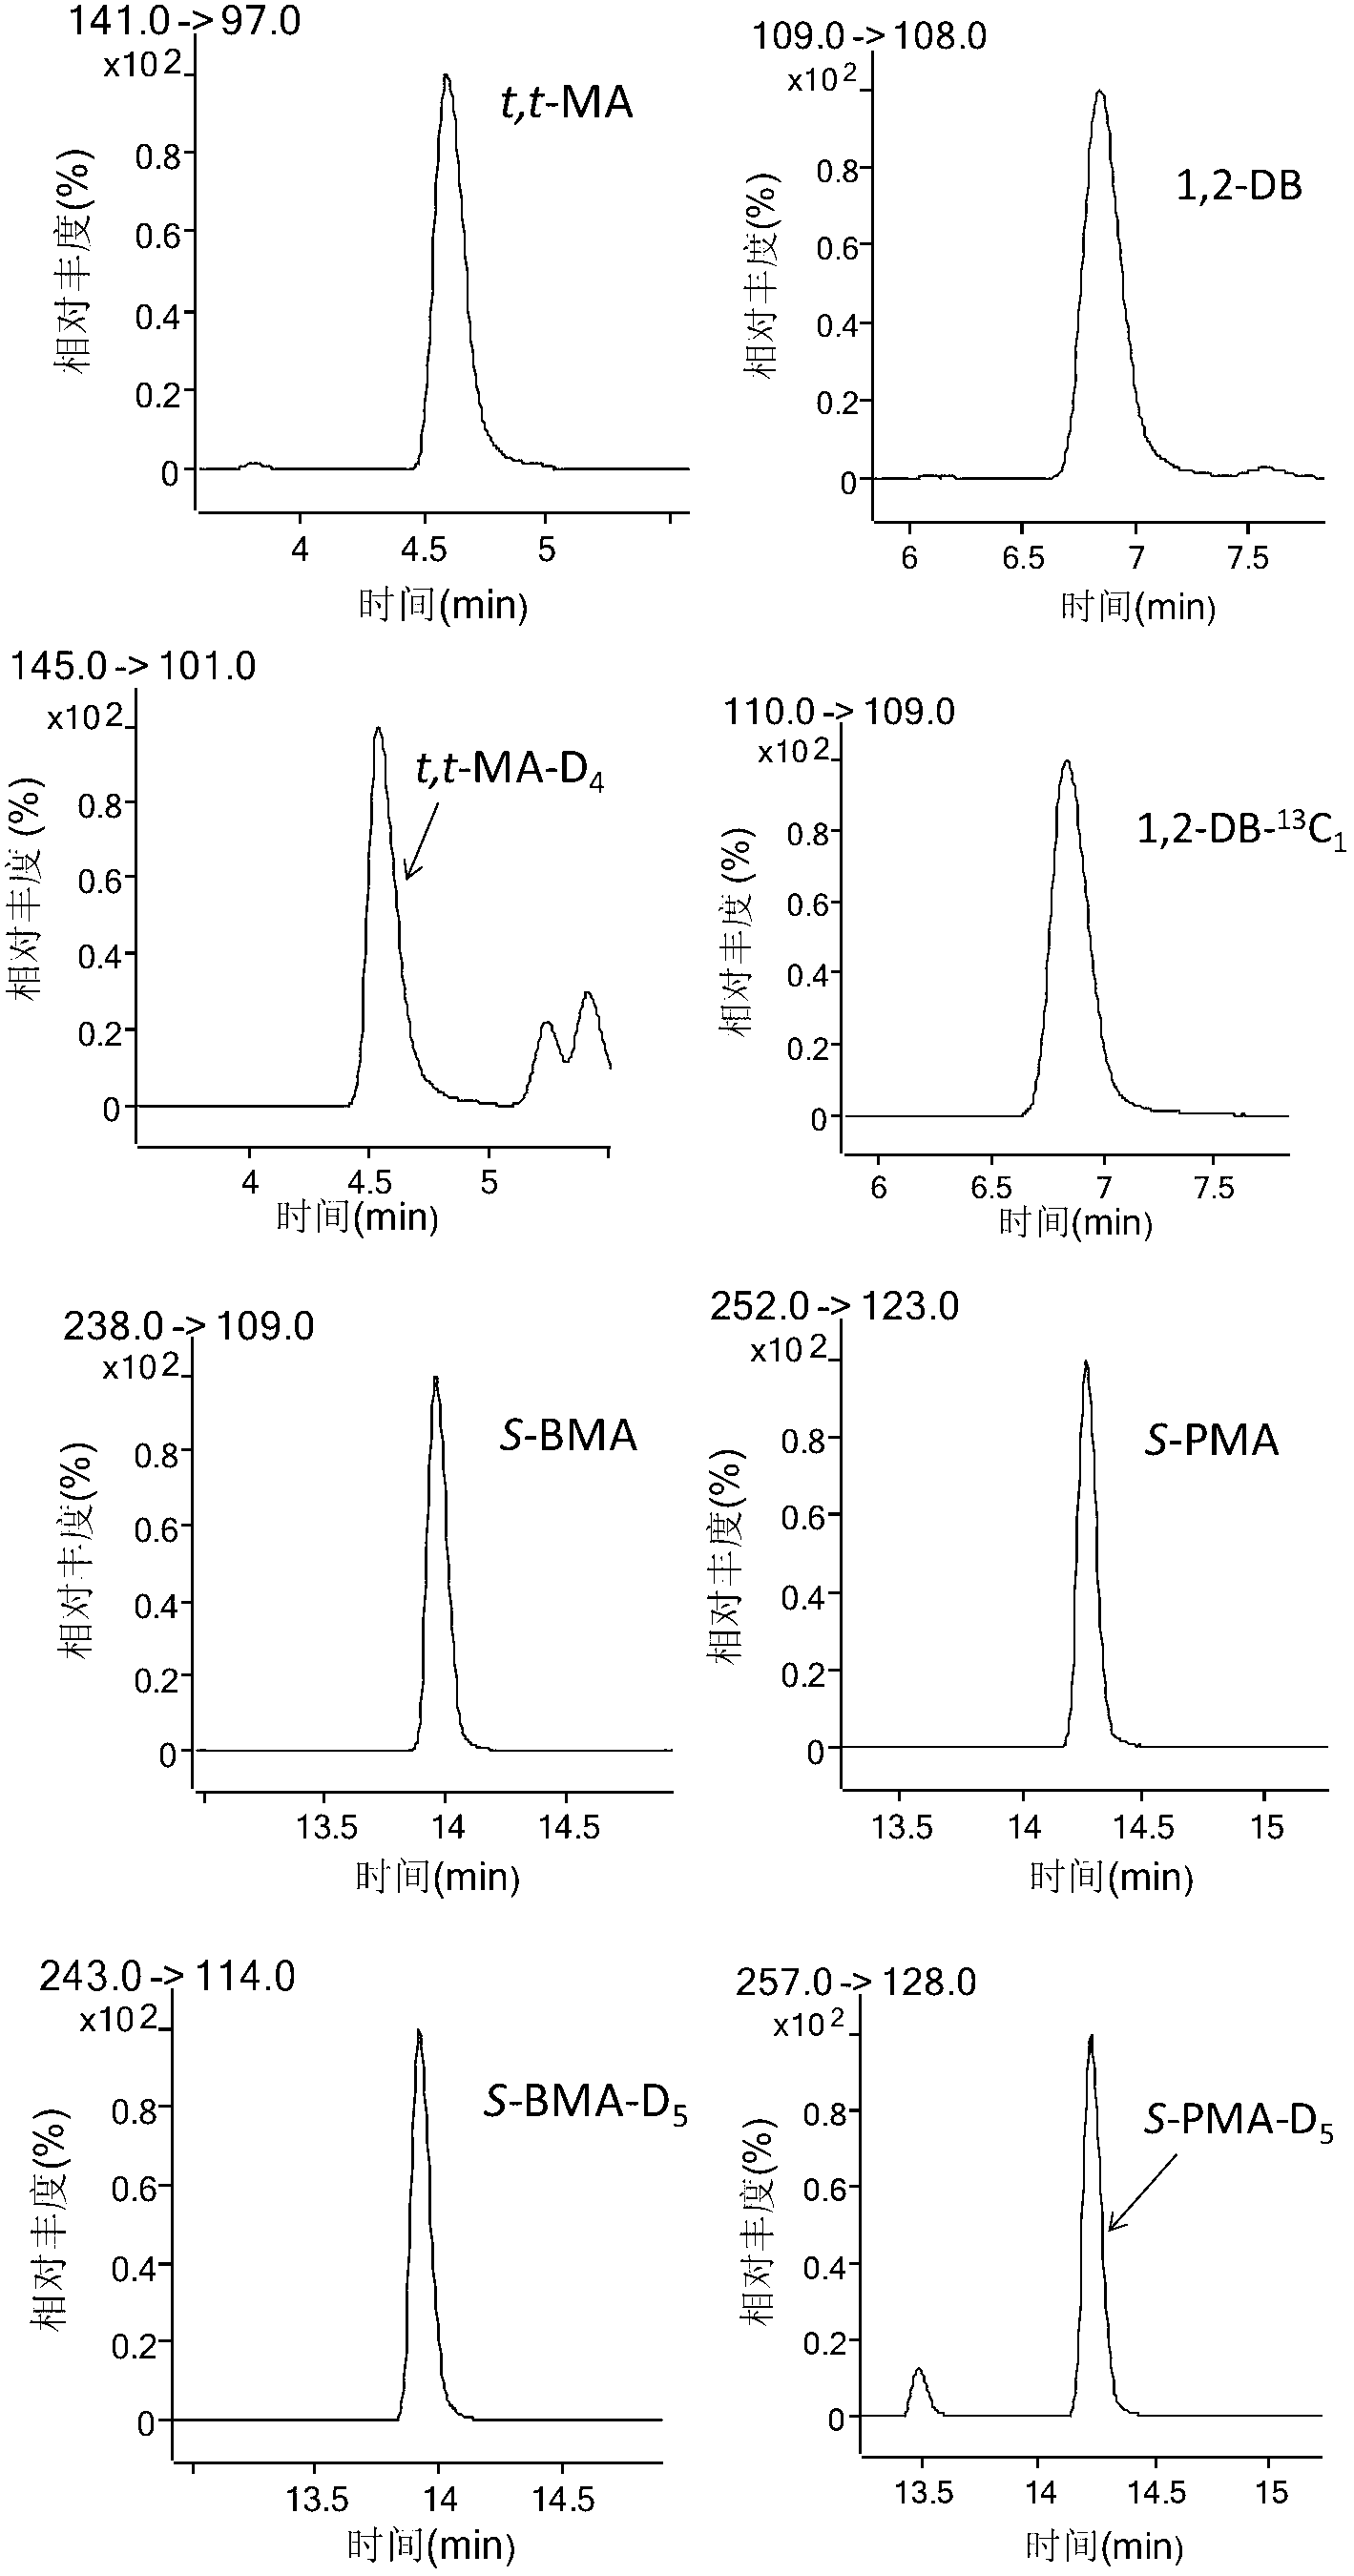 Method for analyzing four benzene and toluene metabolites in urine through liquid chromatography-tandem mass spectrometry